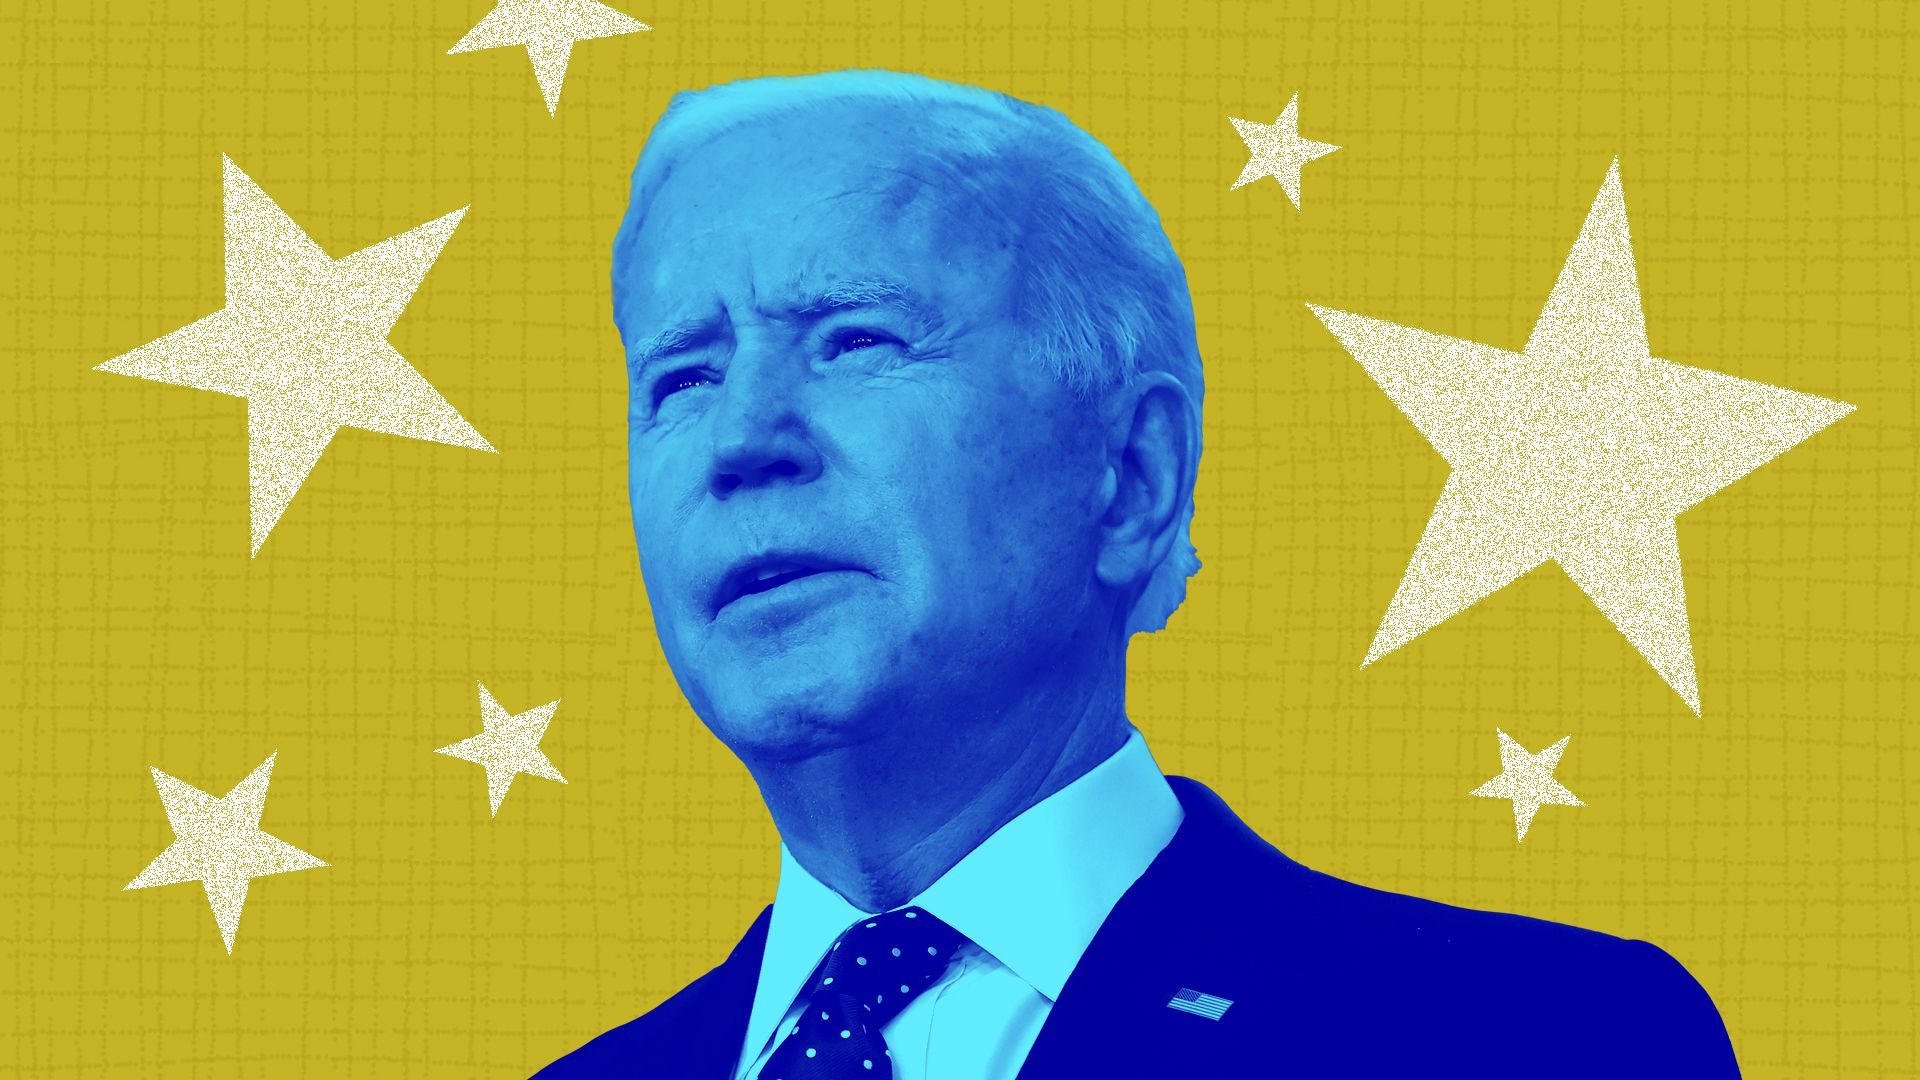 Photo illustration of President Biden surrounded by stars